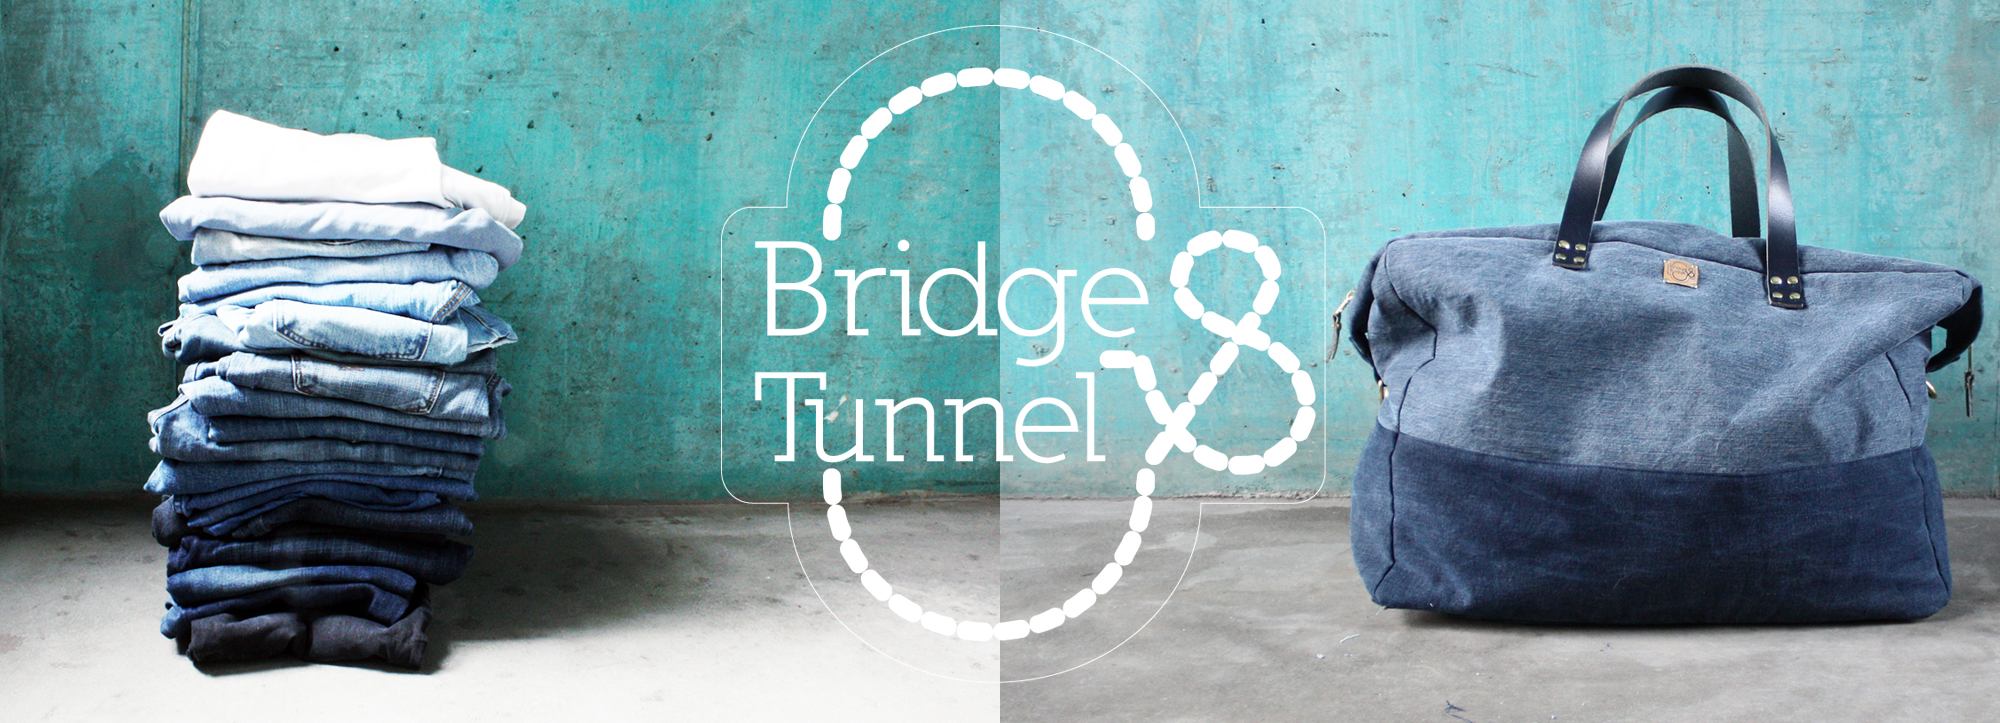 Bridge & Tunnel